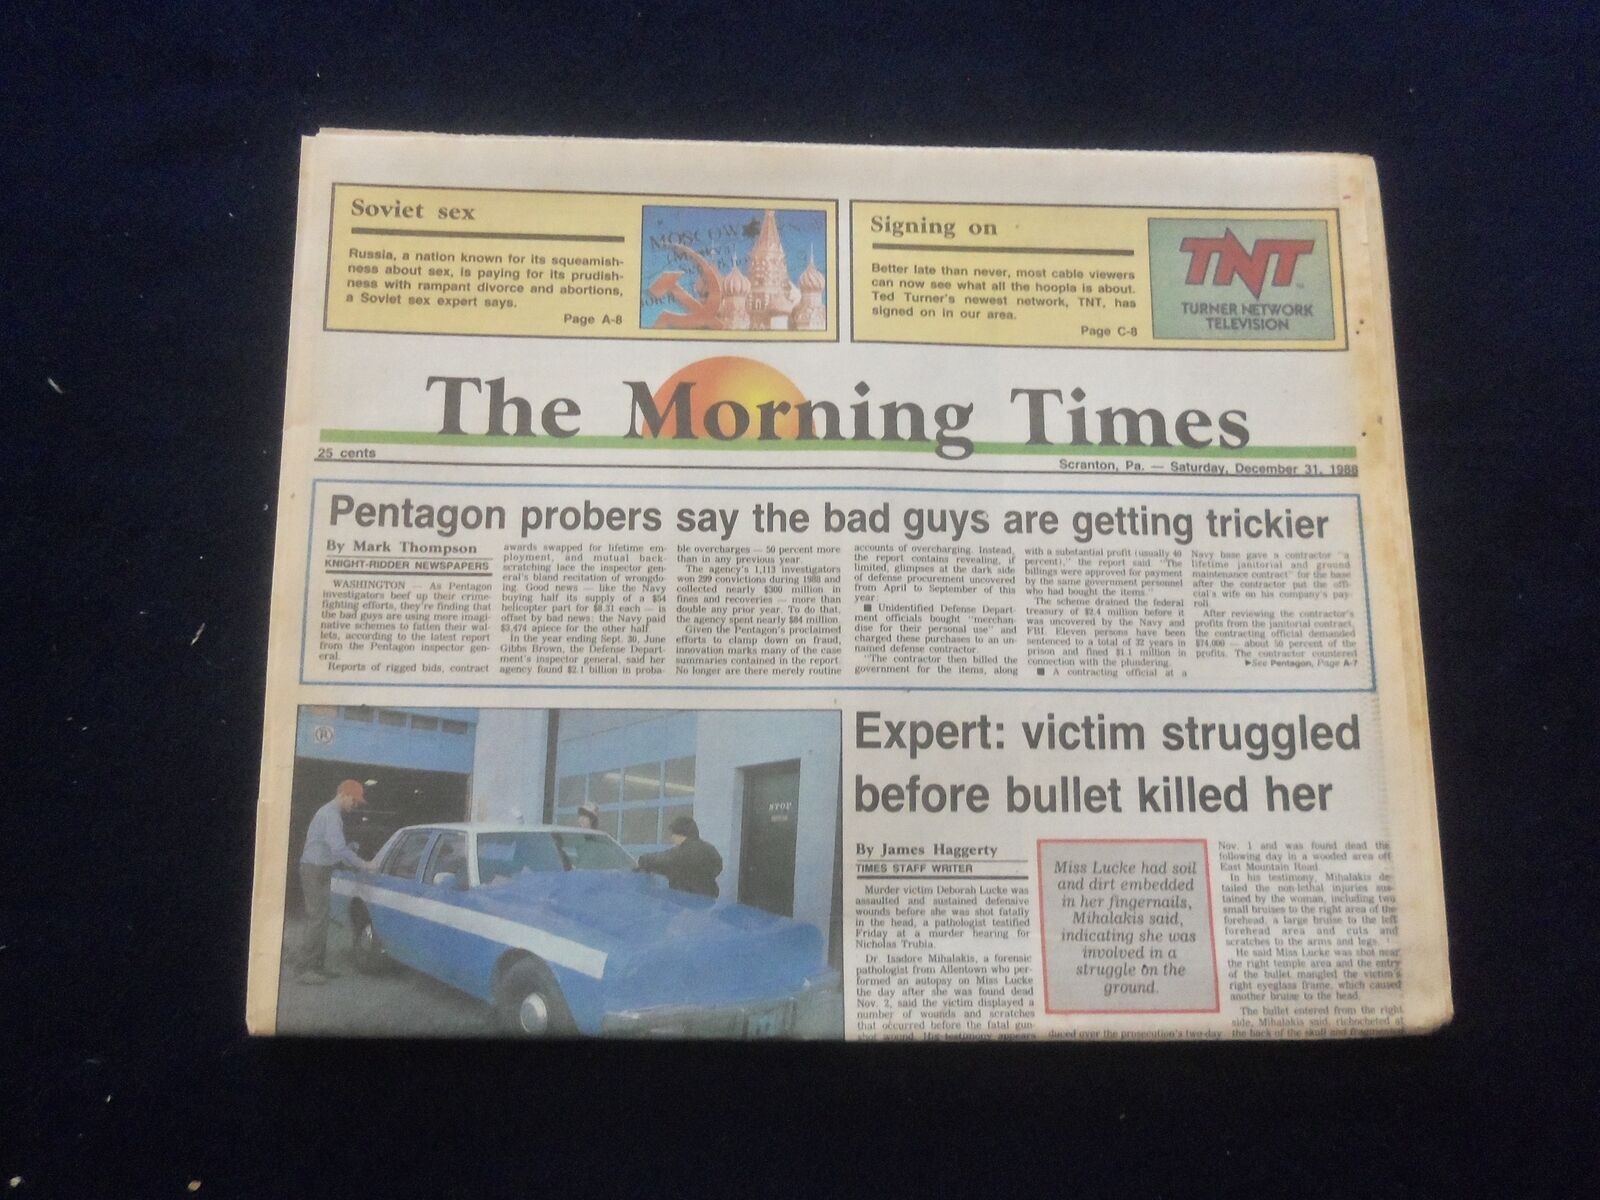 1988 DEC 31 THE MORNING TIMES NEWSPAPER-SCRANTON, PA-BAD GUYS TRICKIER - NP 6136